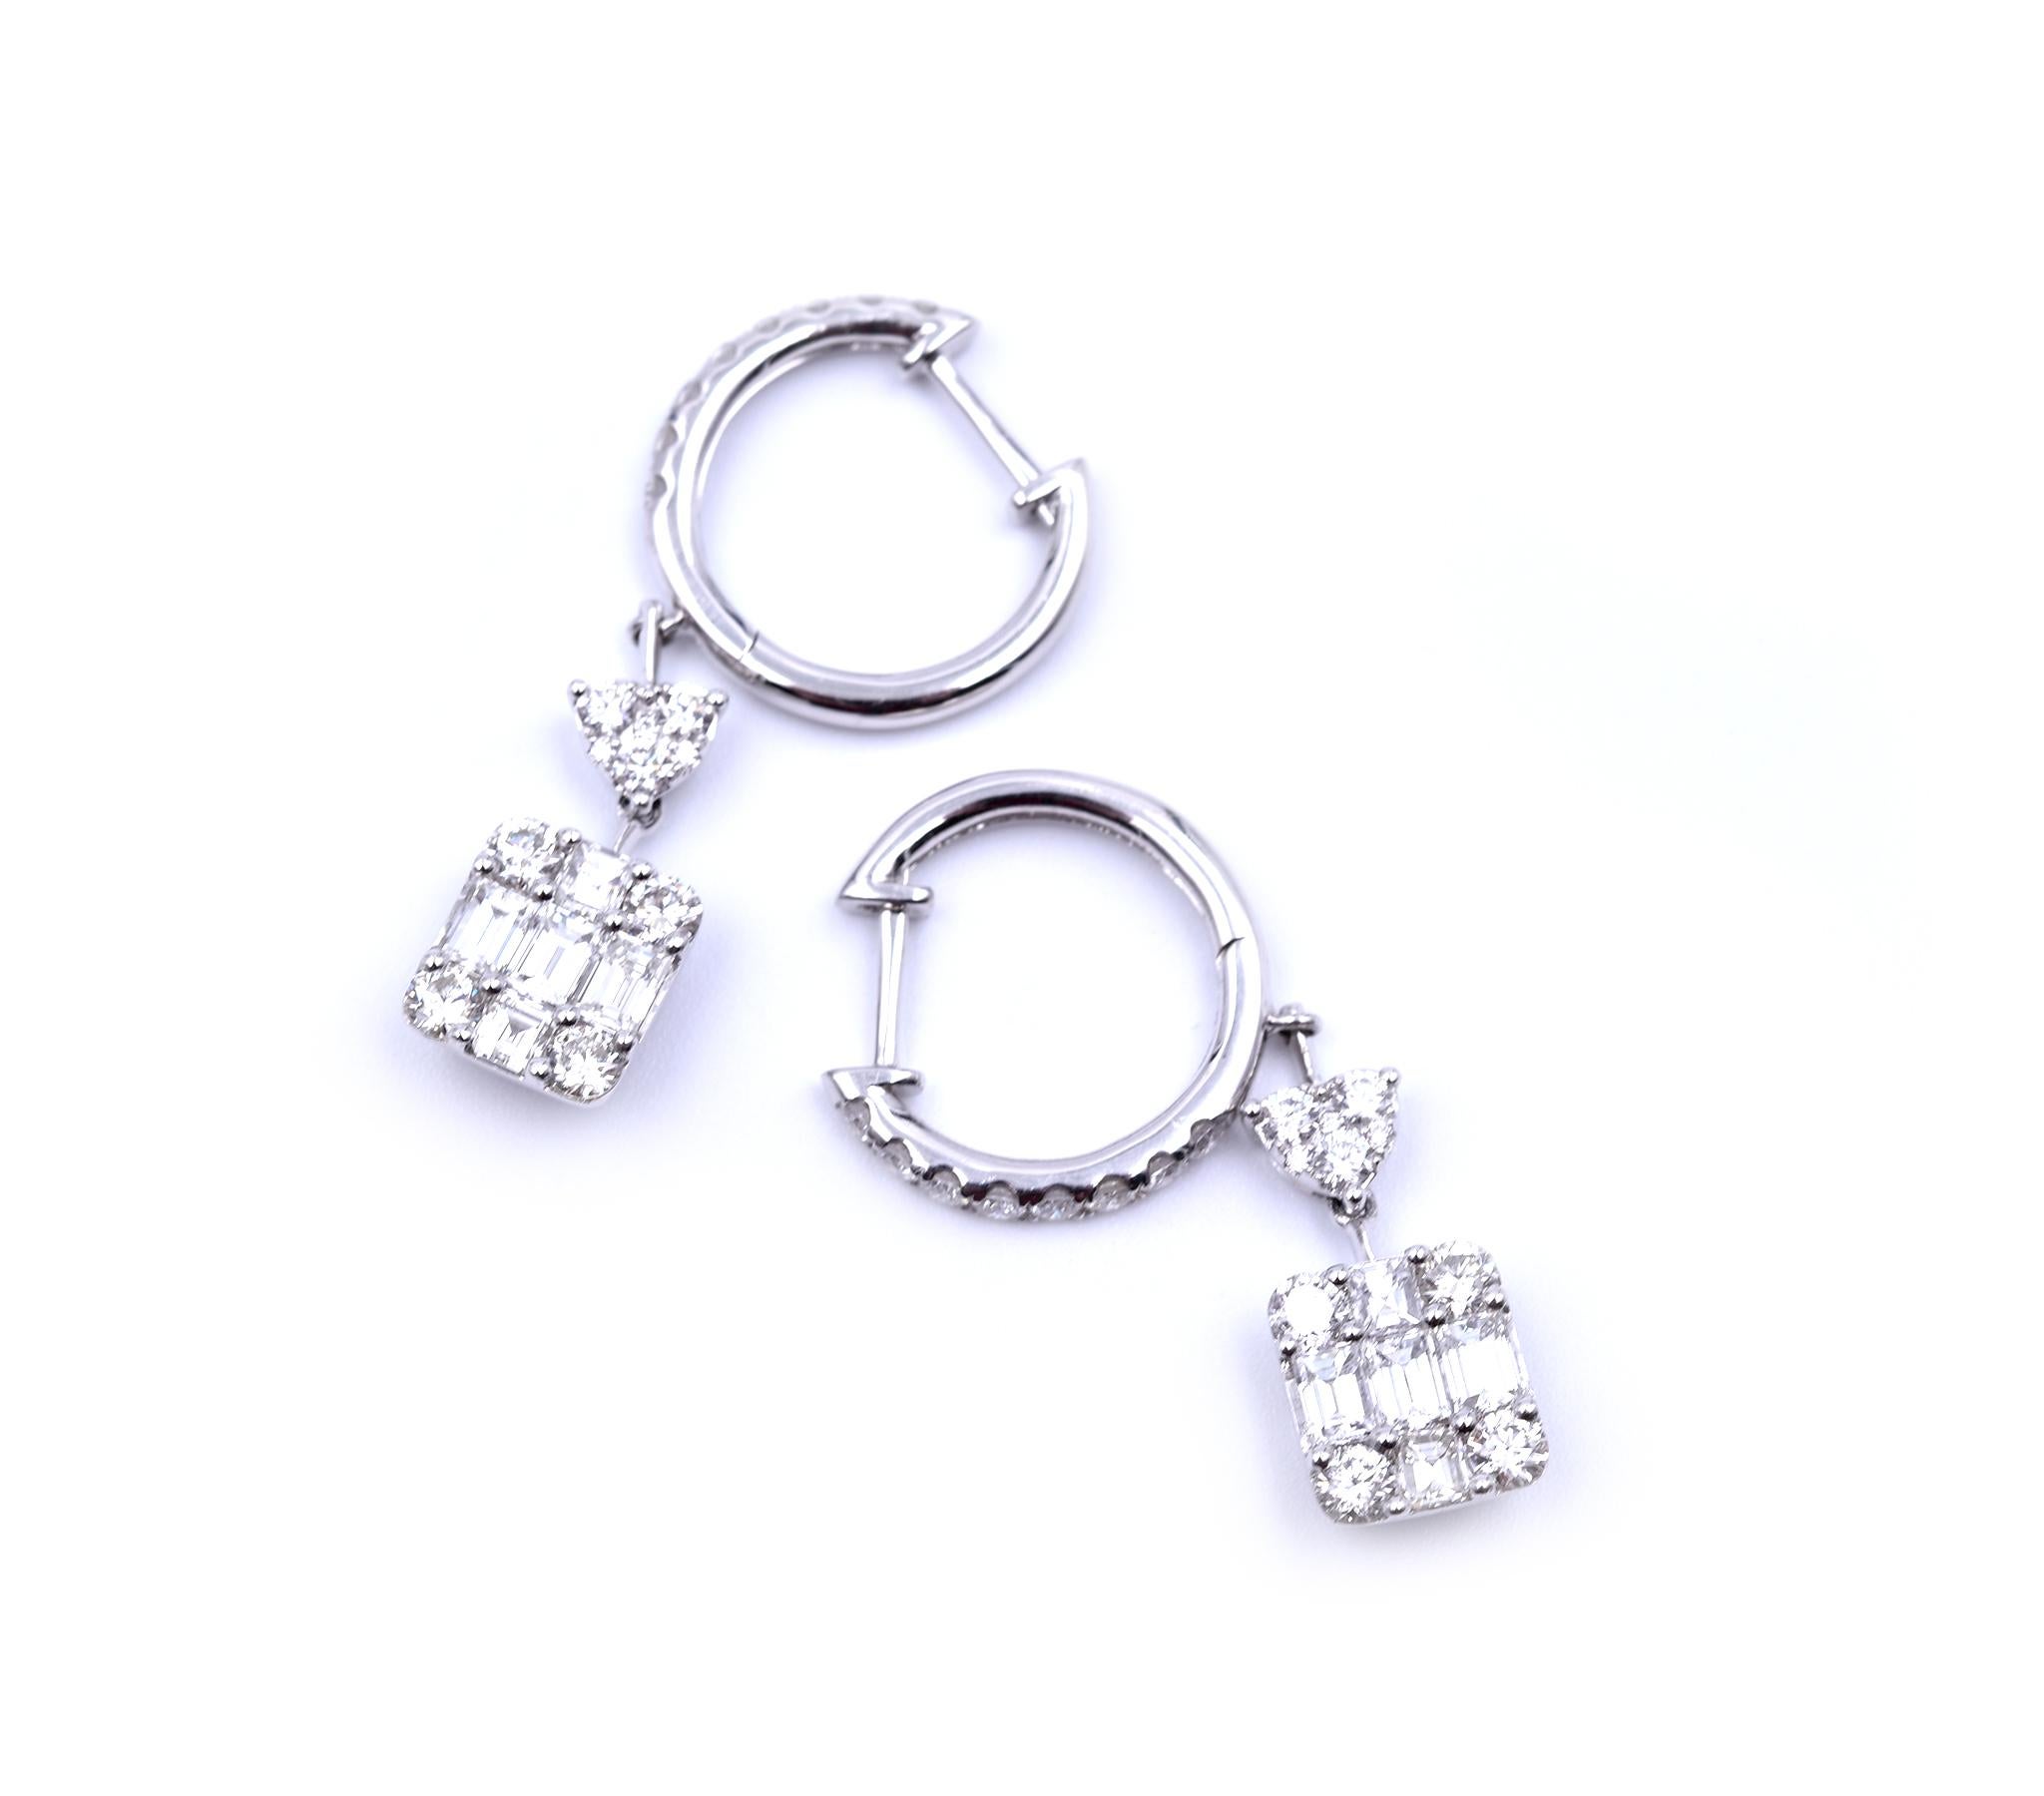 Designer: custom design
Material: 14k rose gold
Diamonds: 40 diamonds= 2.54cttw
Color: G
Clarity: VS	
Dimensions: each earring is 15.80mm diameter by 30mm long
Fastenings: Huggie post
Weight: 5.83 grams
